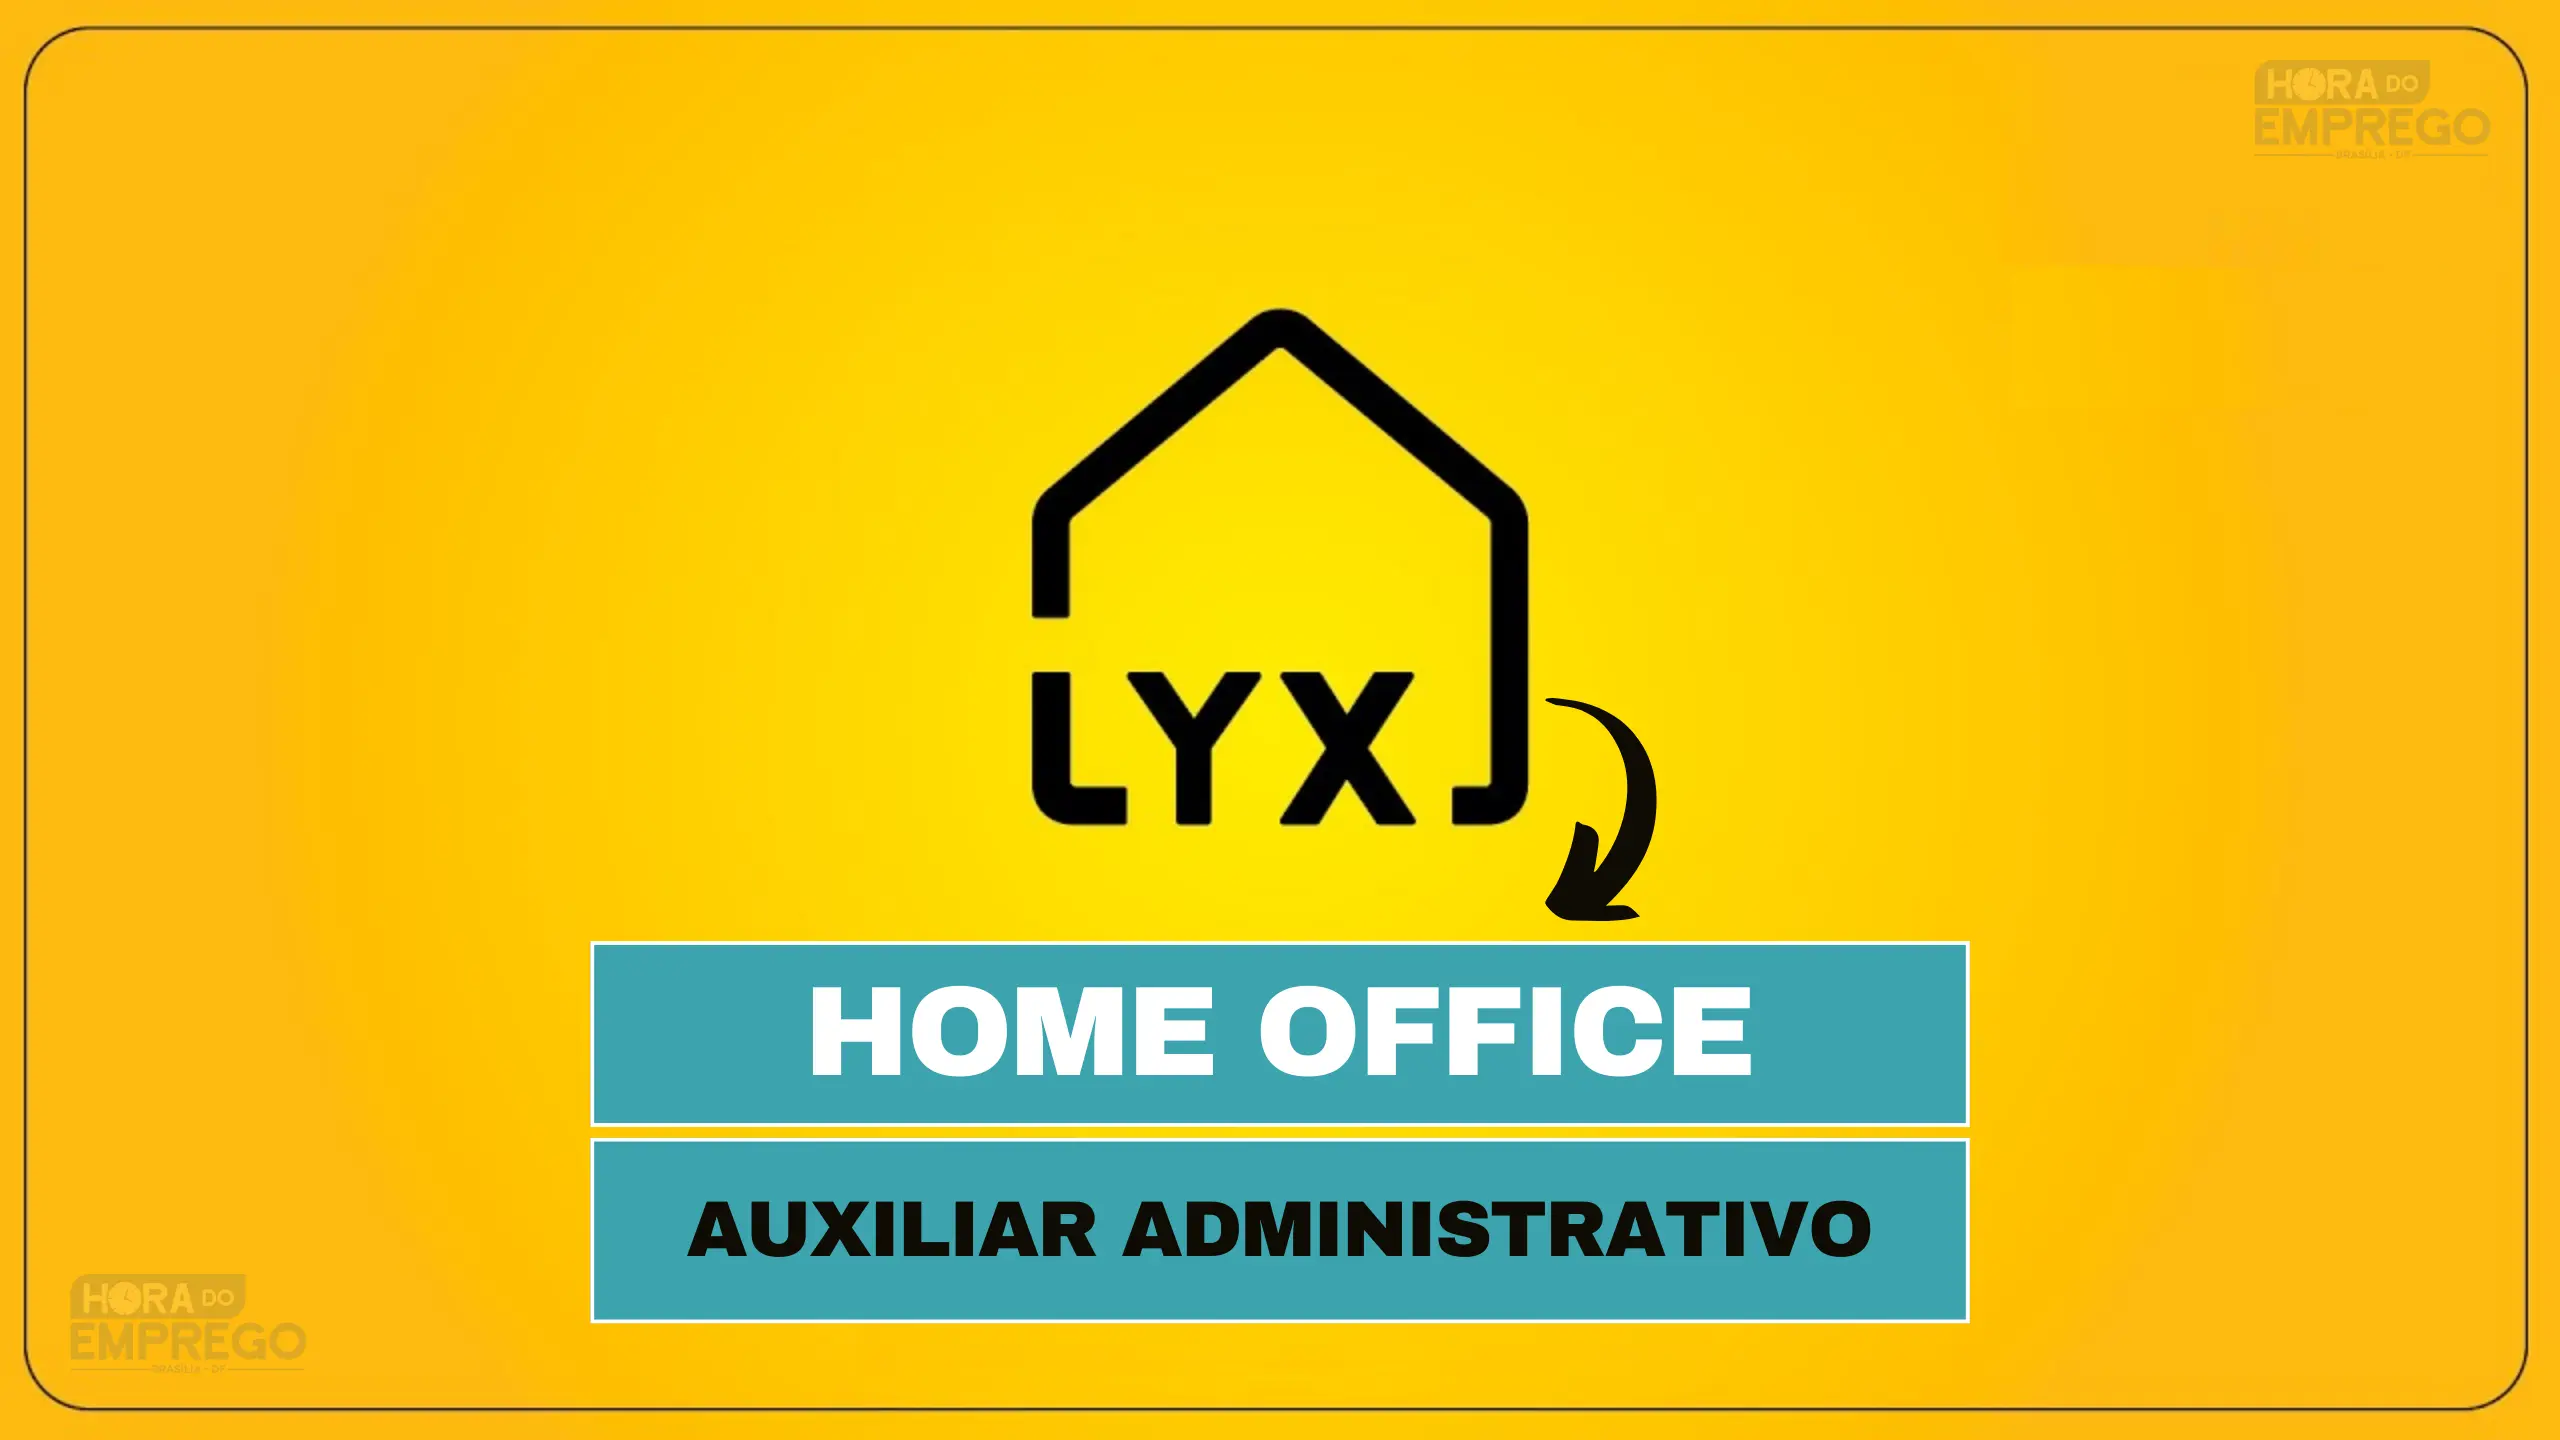 LYX abre vaga HOME OFFICE para Auxiliar Administrativo